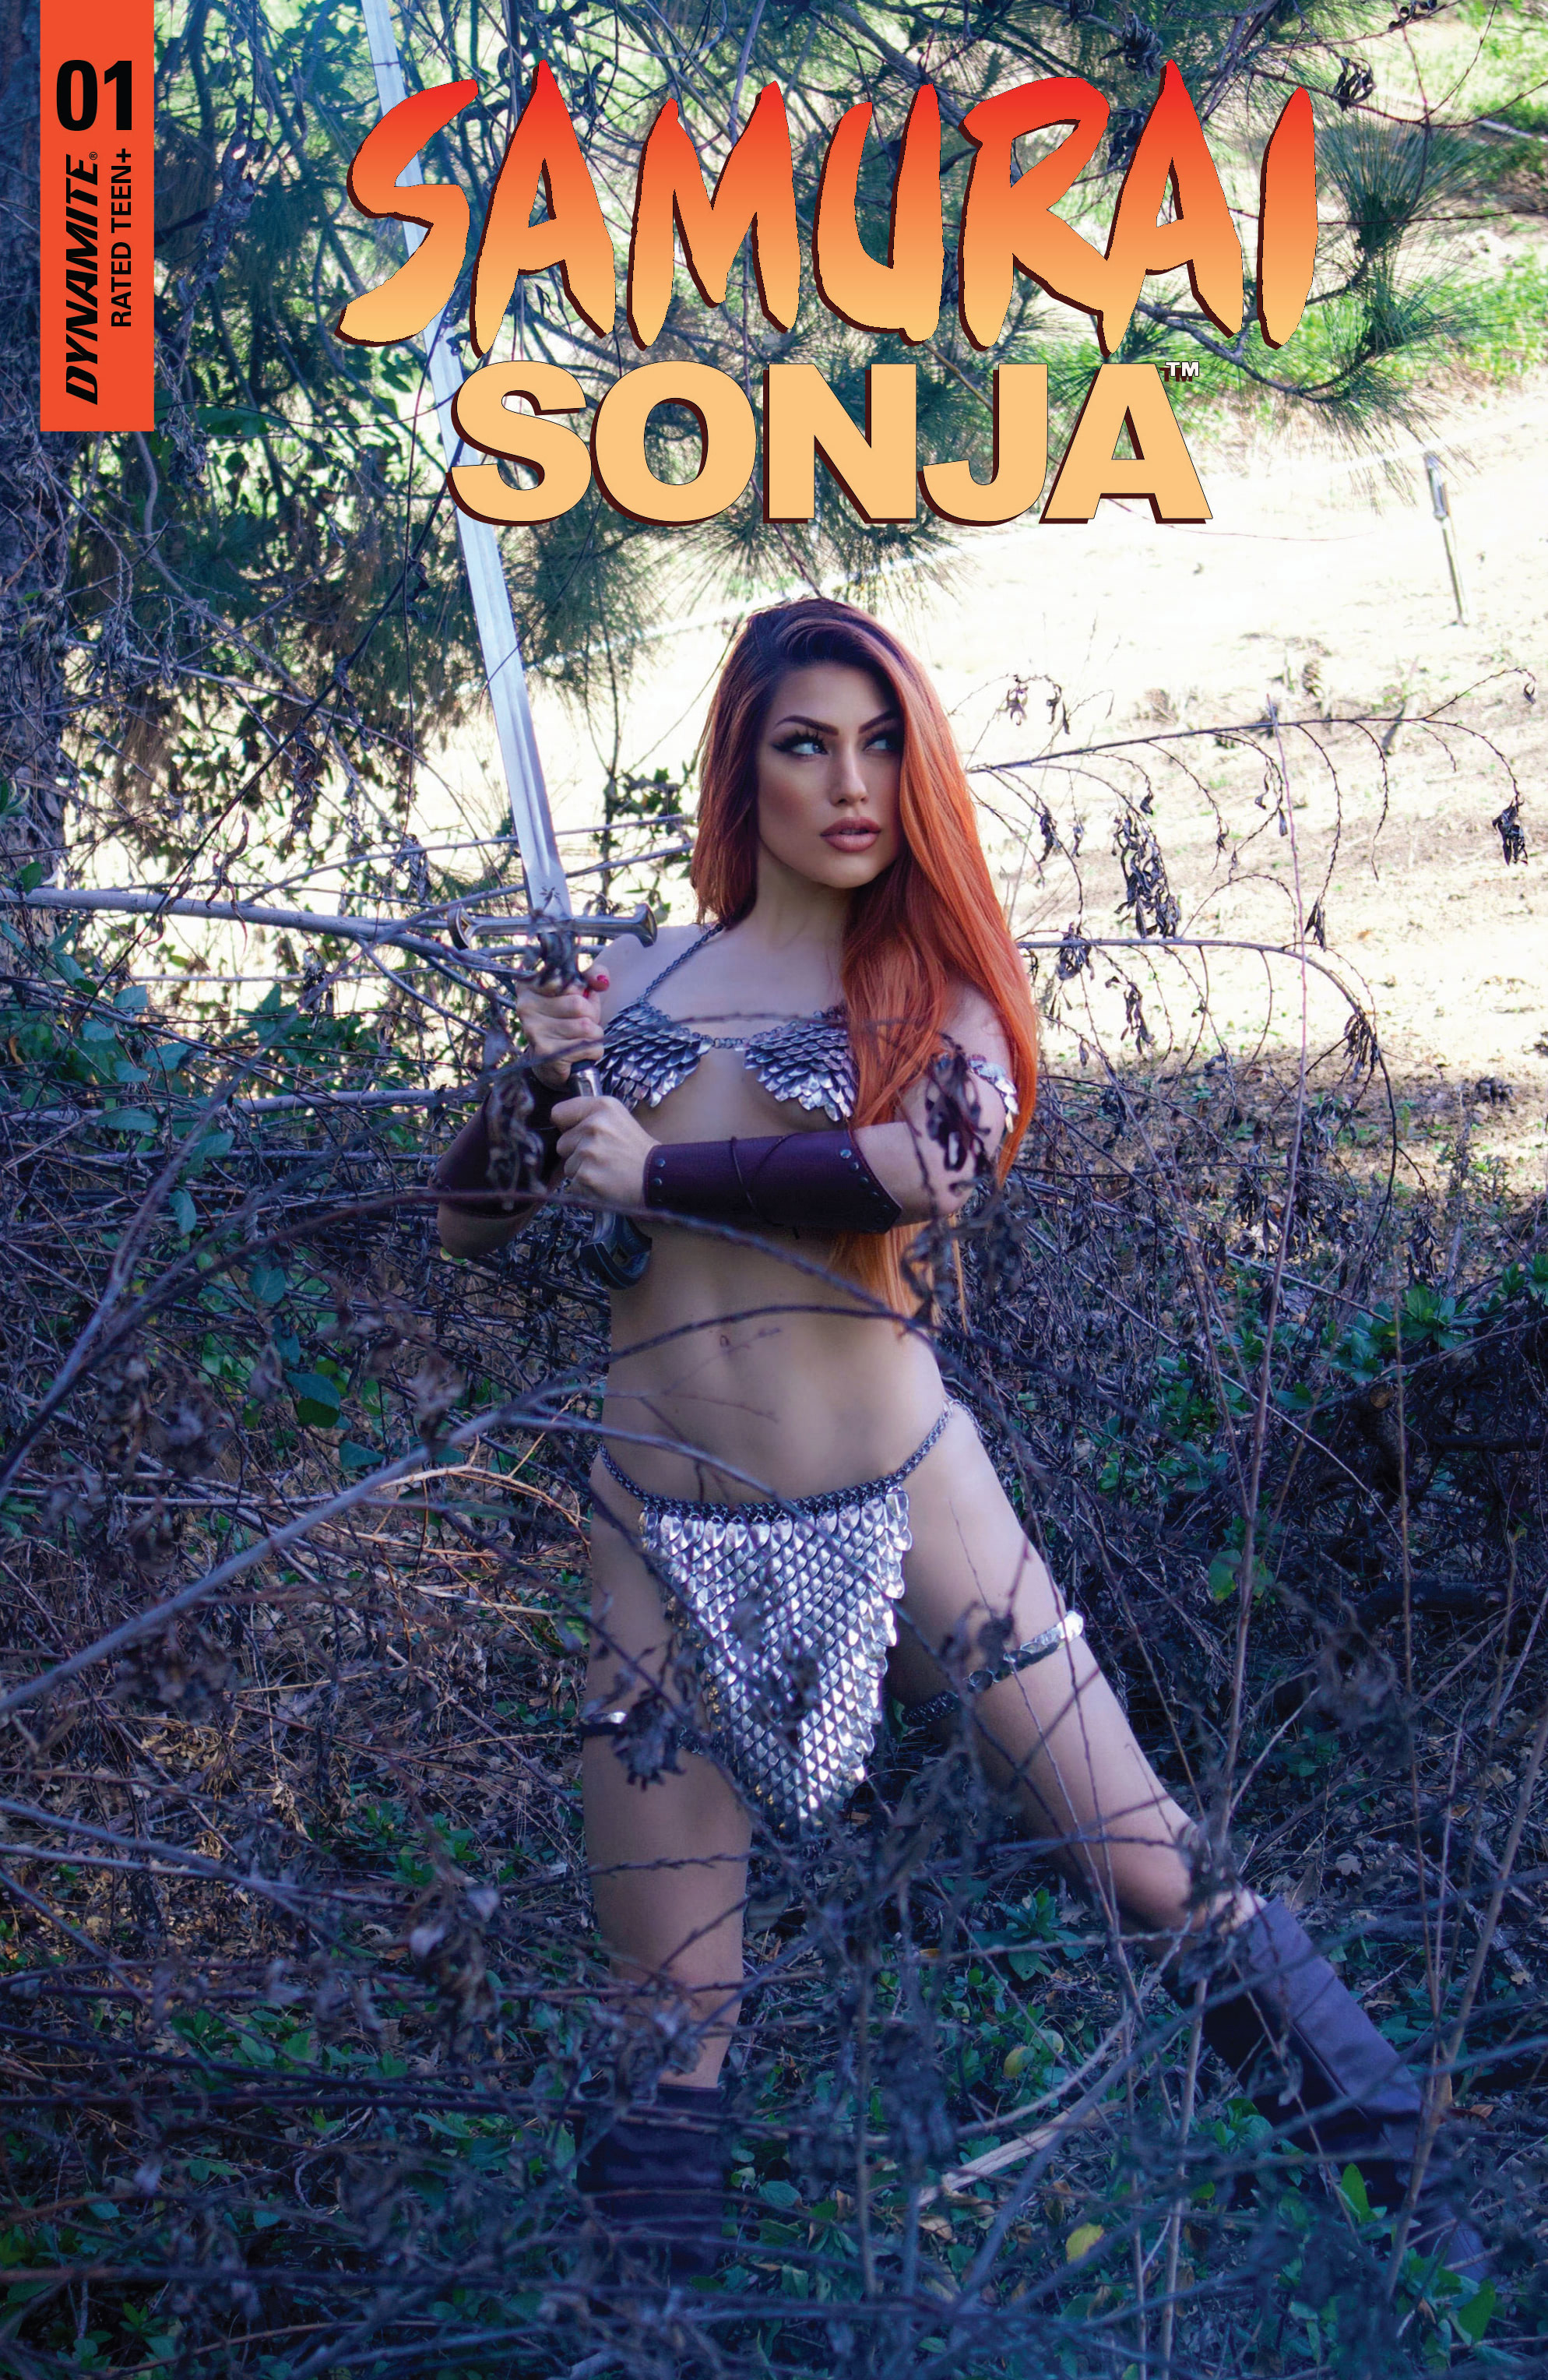 Read online Samurai Sonja comic -  Issue #1 - 5